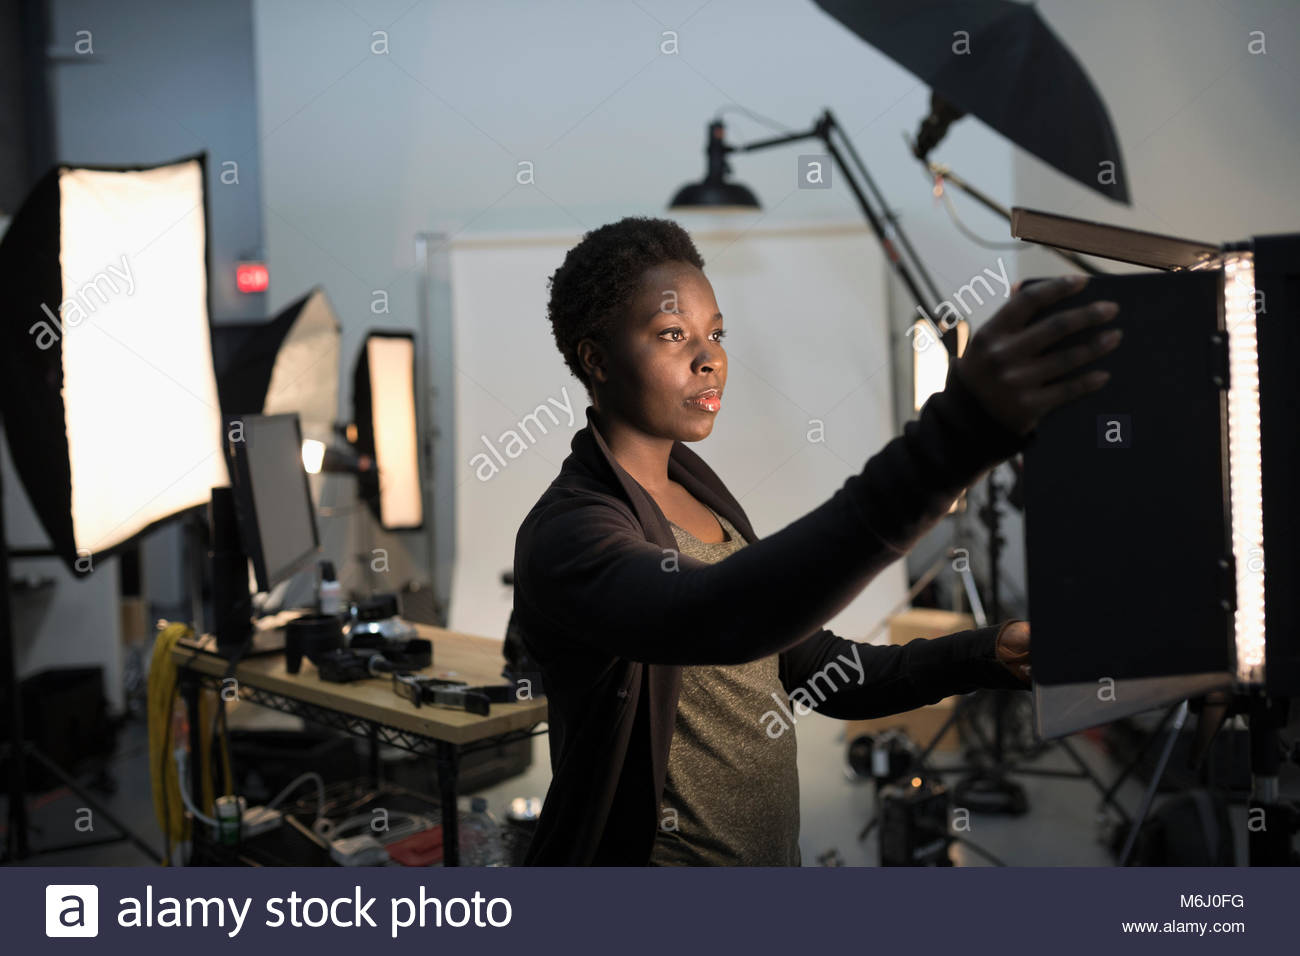 Focused female photographer adjusting lighting equipment for photo shoot in studio Stock Photo